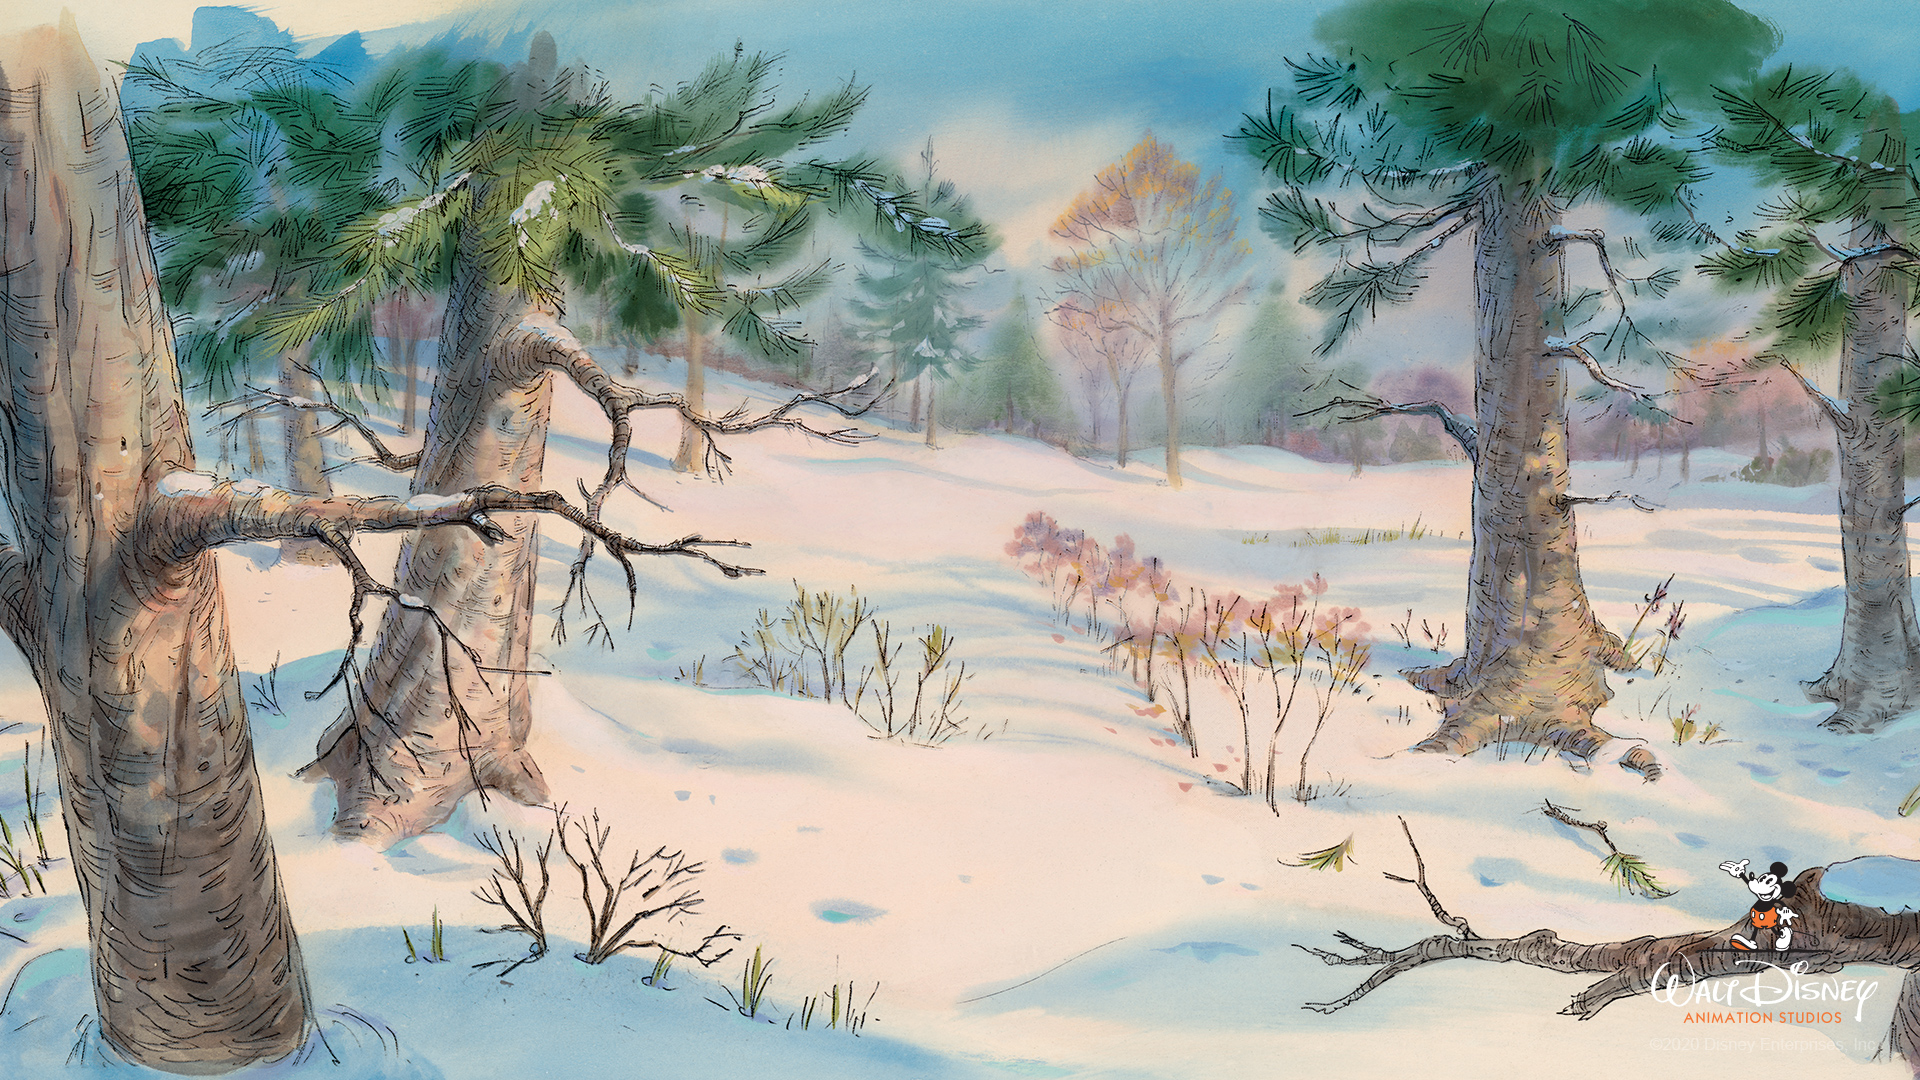 Winter Wonderland Disney Wallpapers